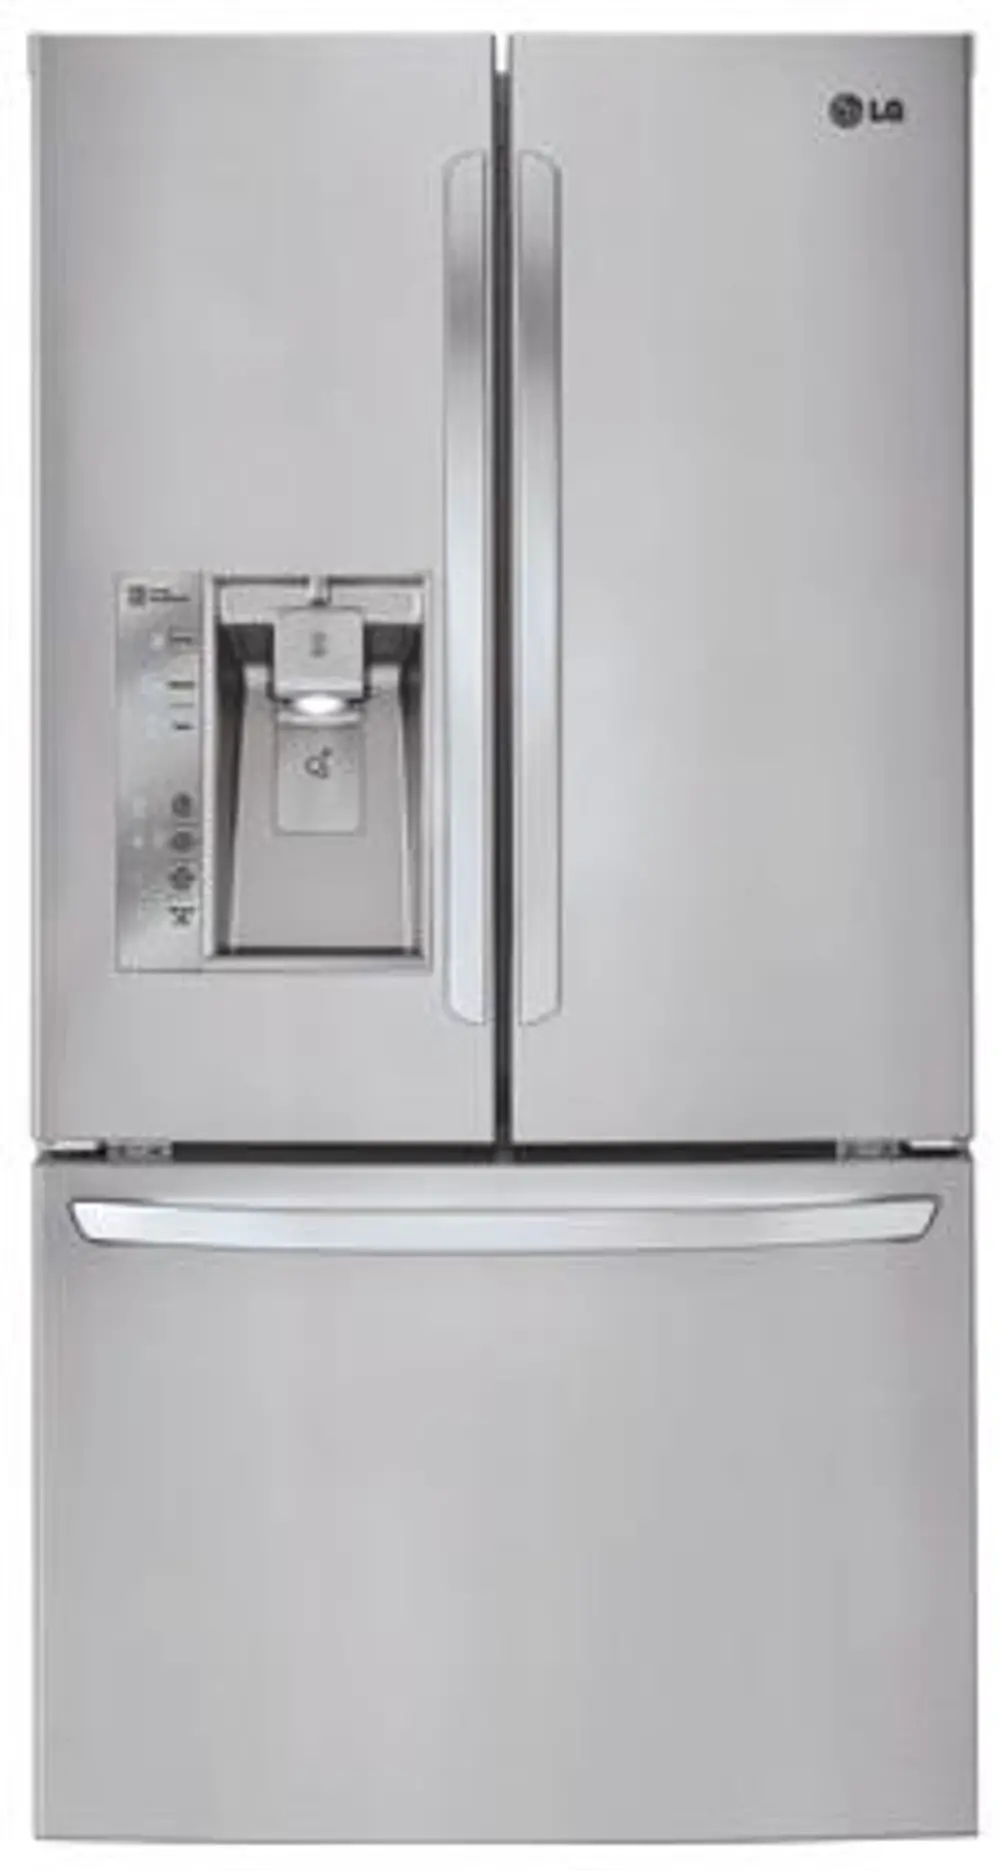 LFXS32726S LG Stainless Steel French Door Refrigerator - 36 Inch-1